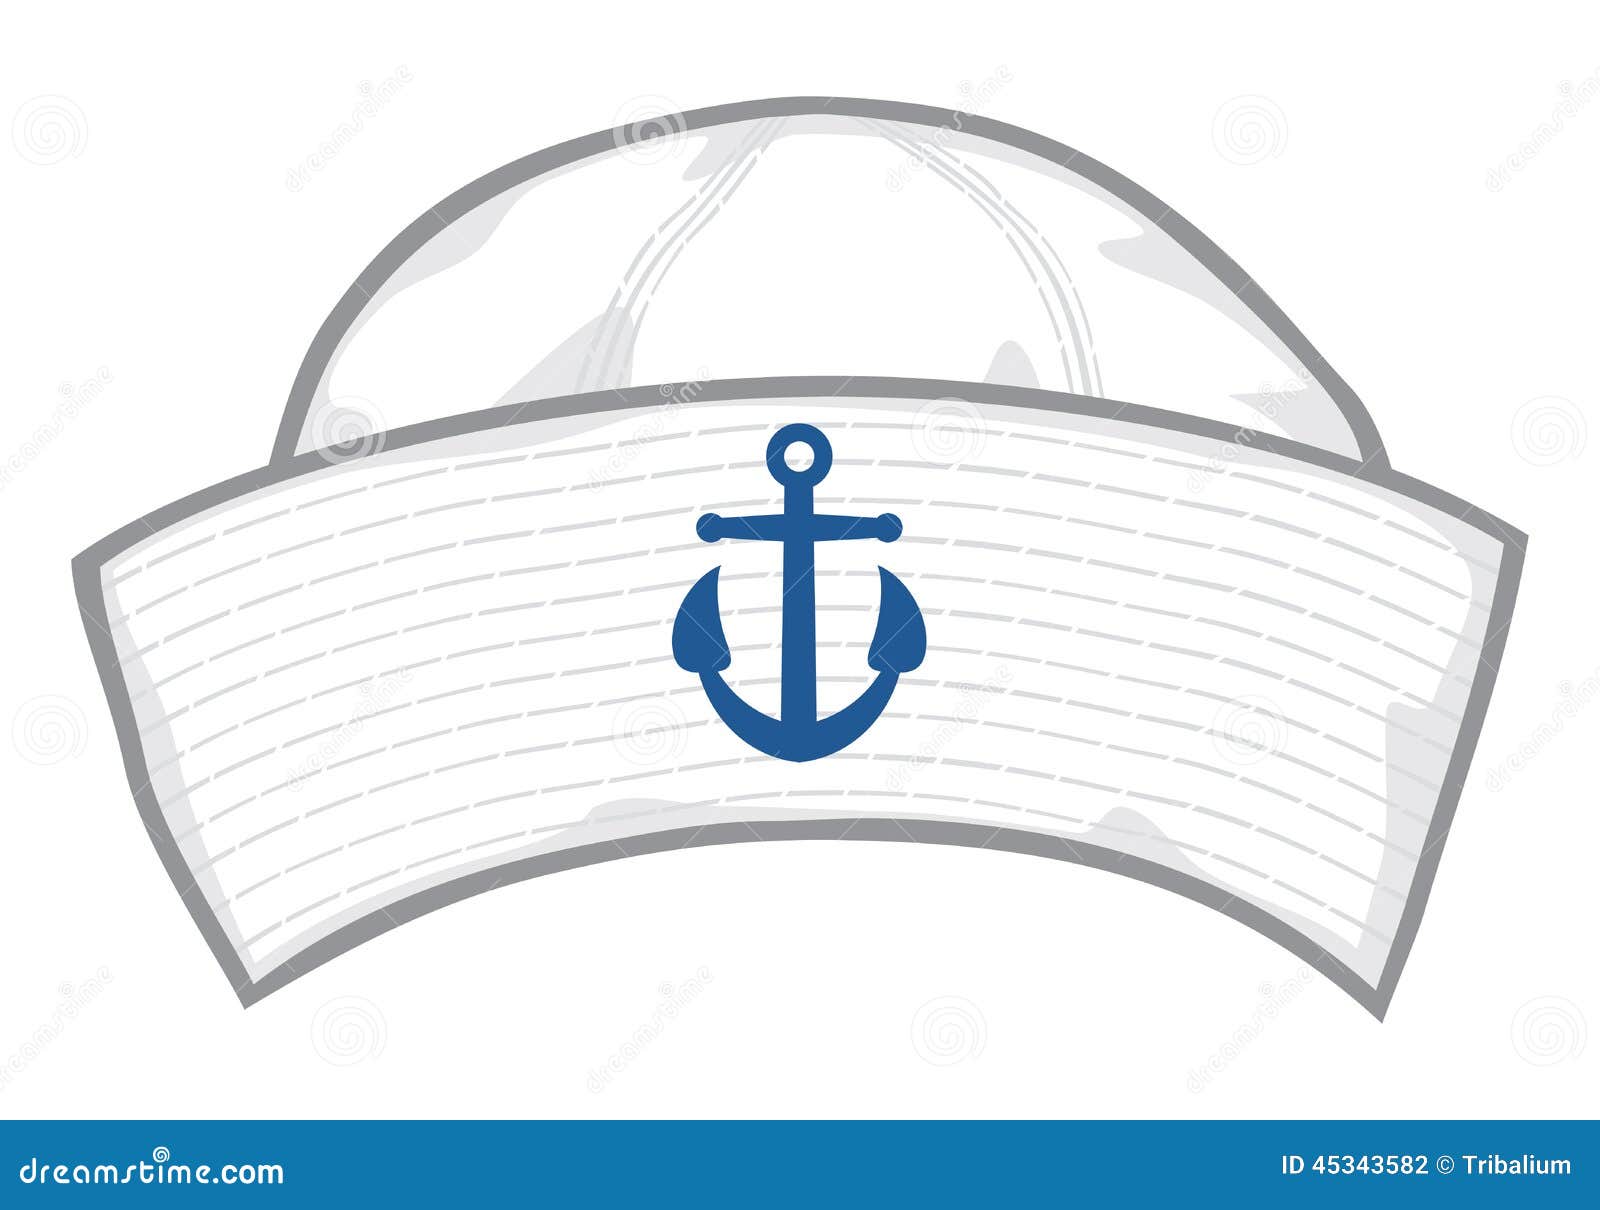 navy hat clipart - photo #16